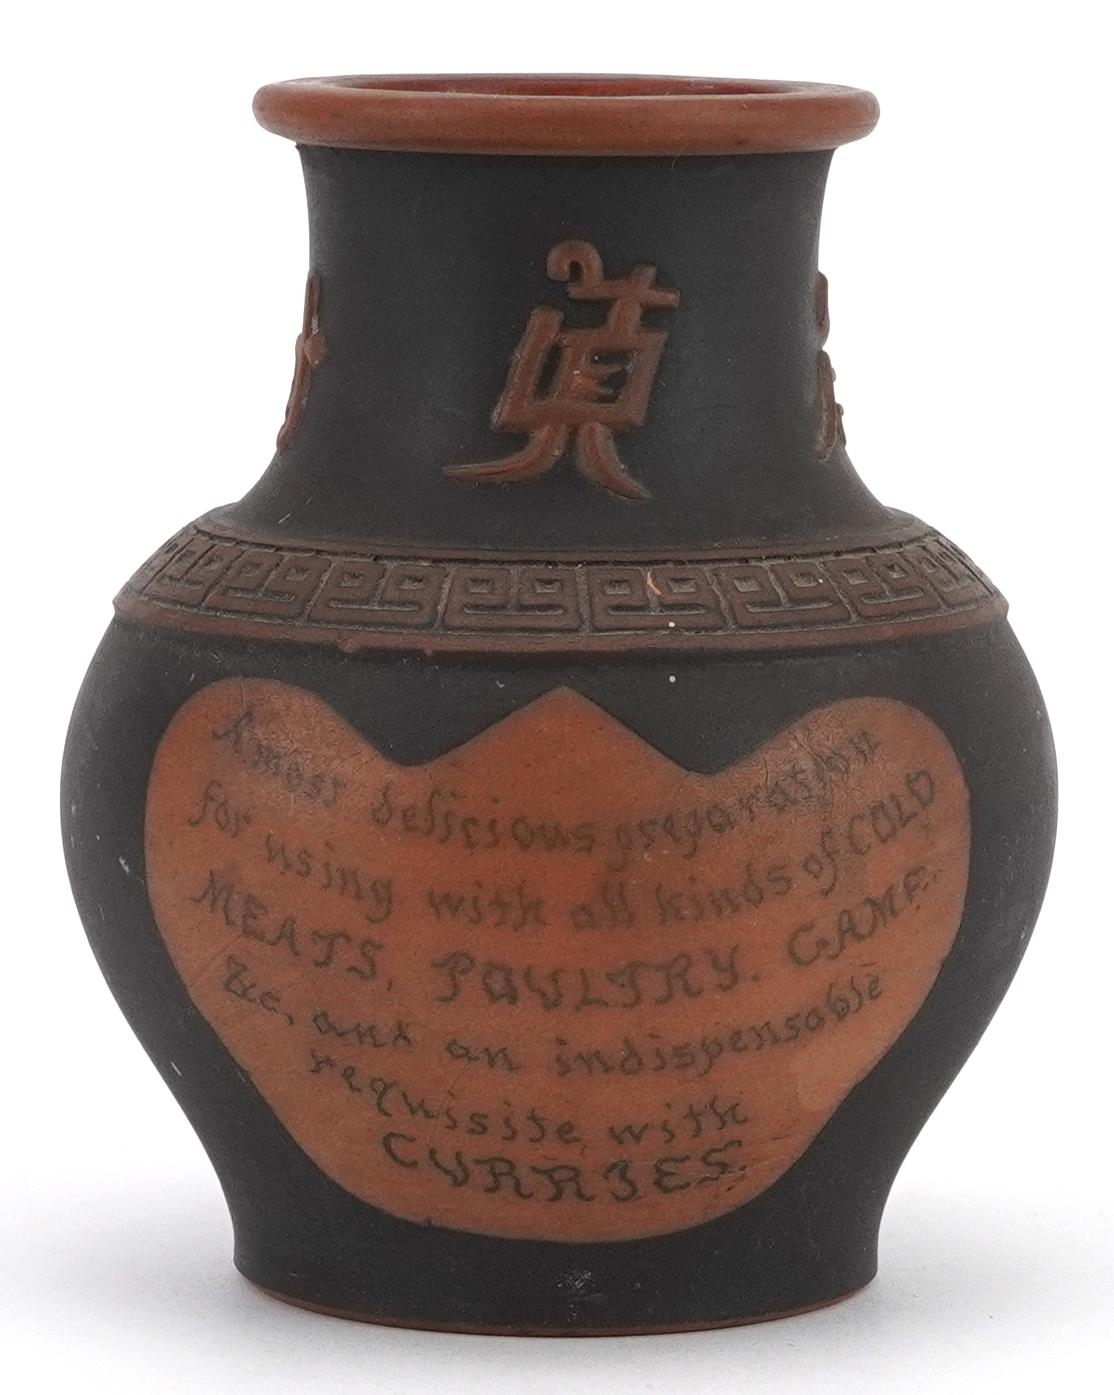 19th century terracotta Bengal Chutney advertising jar prepared by Shalk Abdool Fyco, 10cm high : - Image 2 of 3